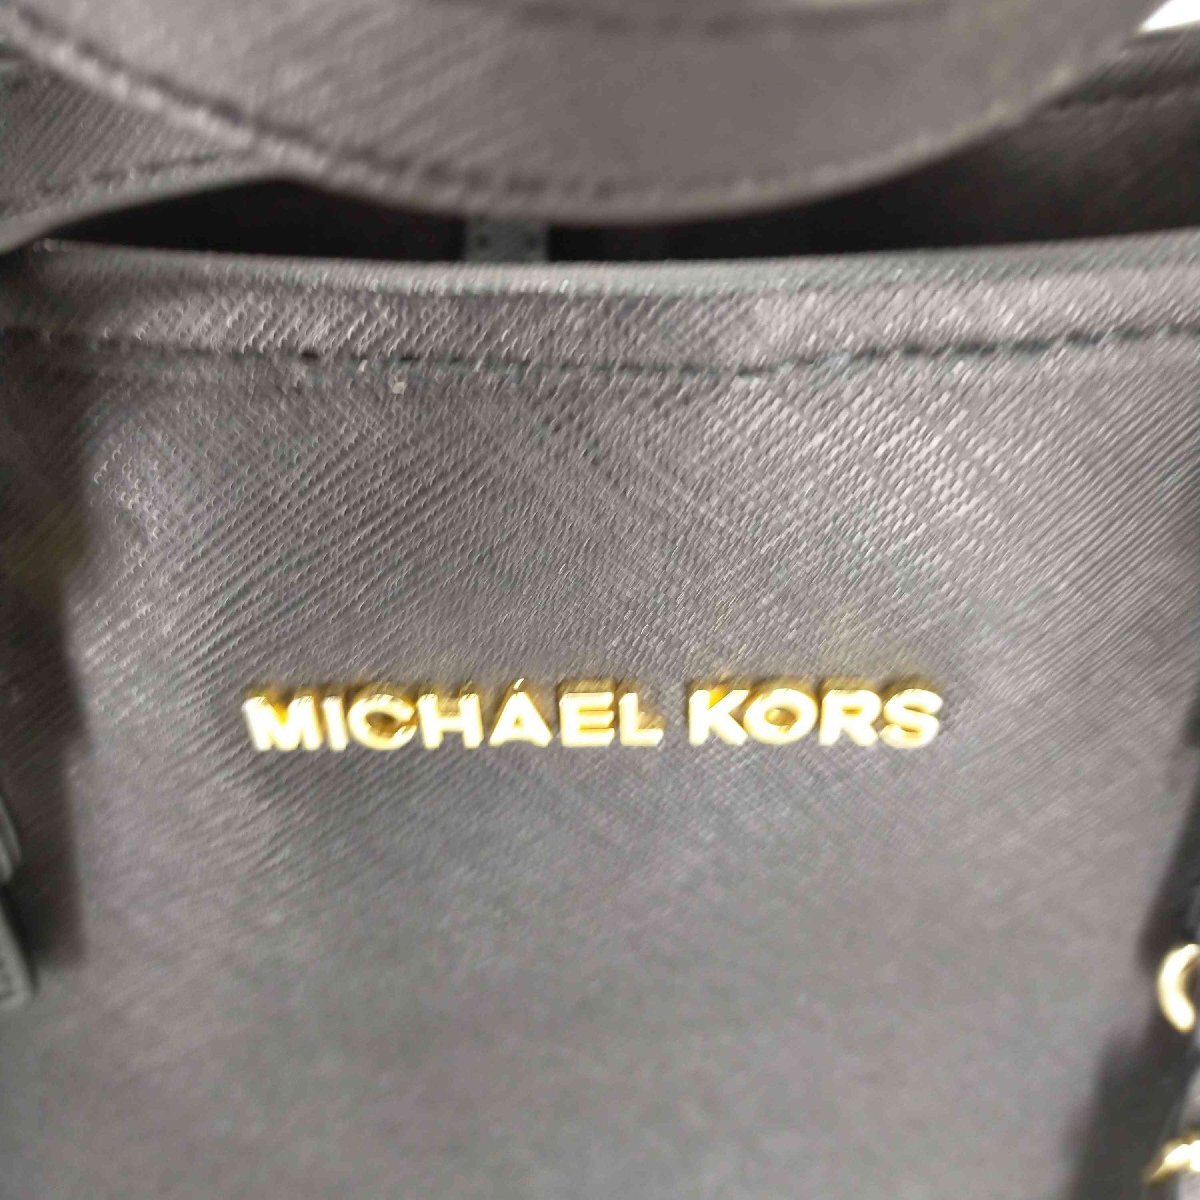 Michael Kors( Michael Kors ) RUTHIEsa che ru2WAY shoulder bag men's O used old clothes 1242